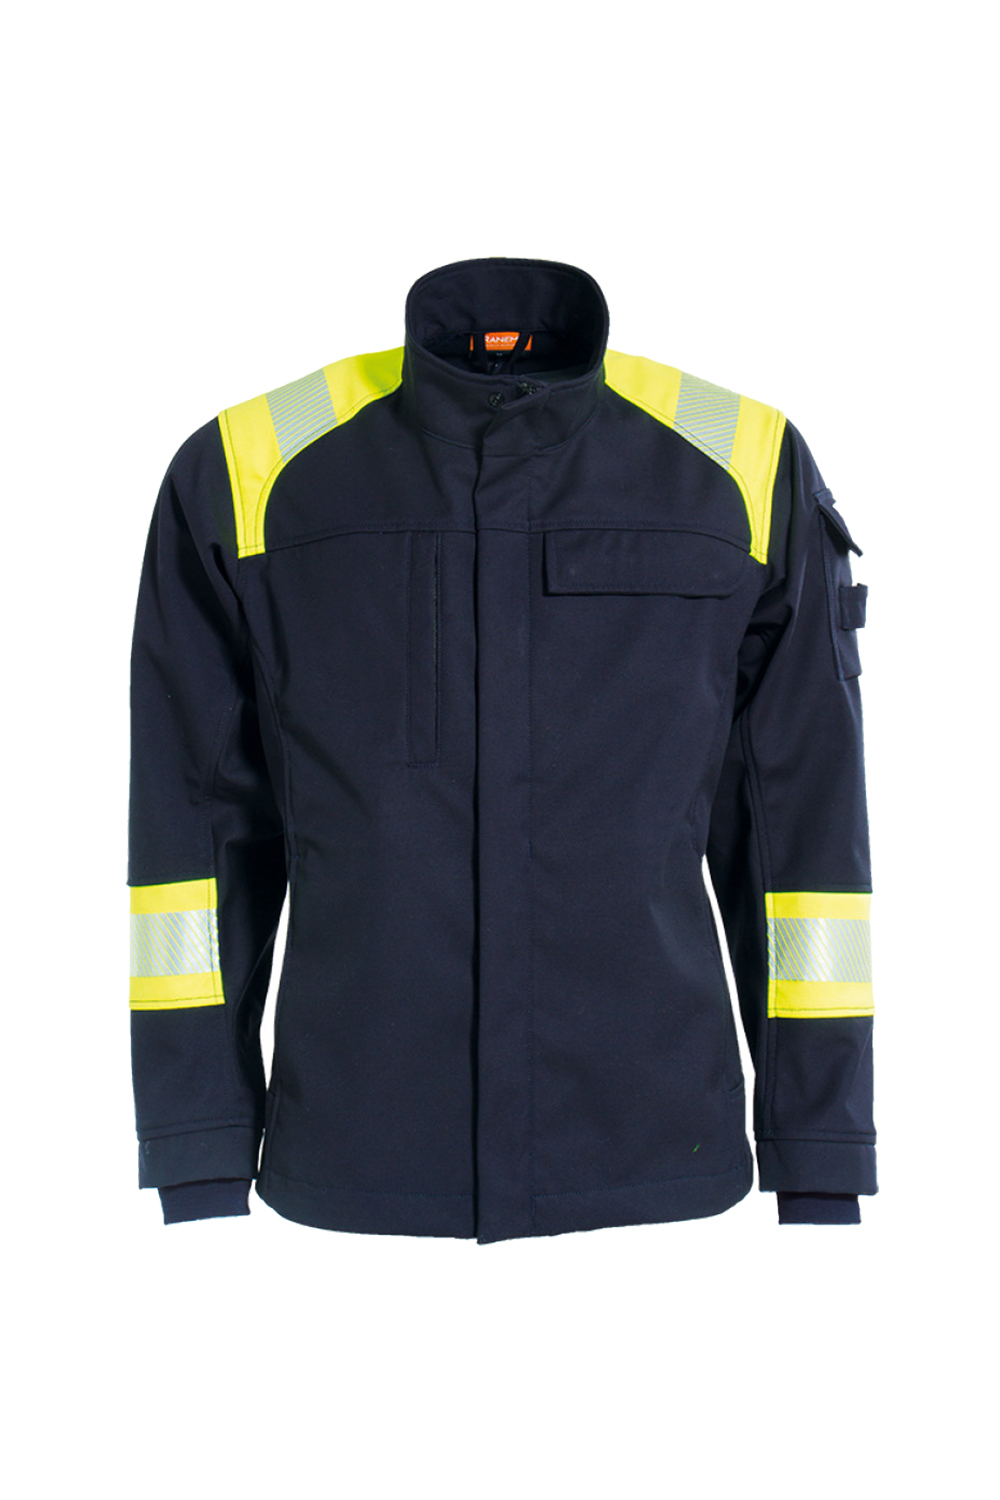 Non-Metal FR Softshell Jacket 6032 95 / Tranemo / Workwear